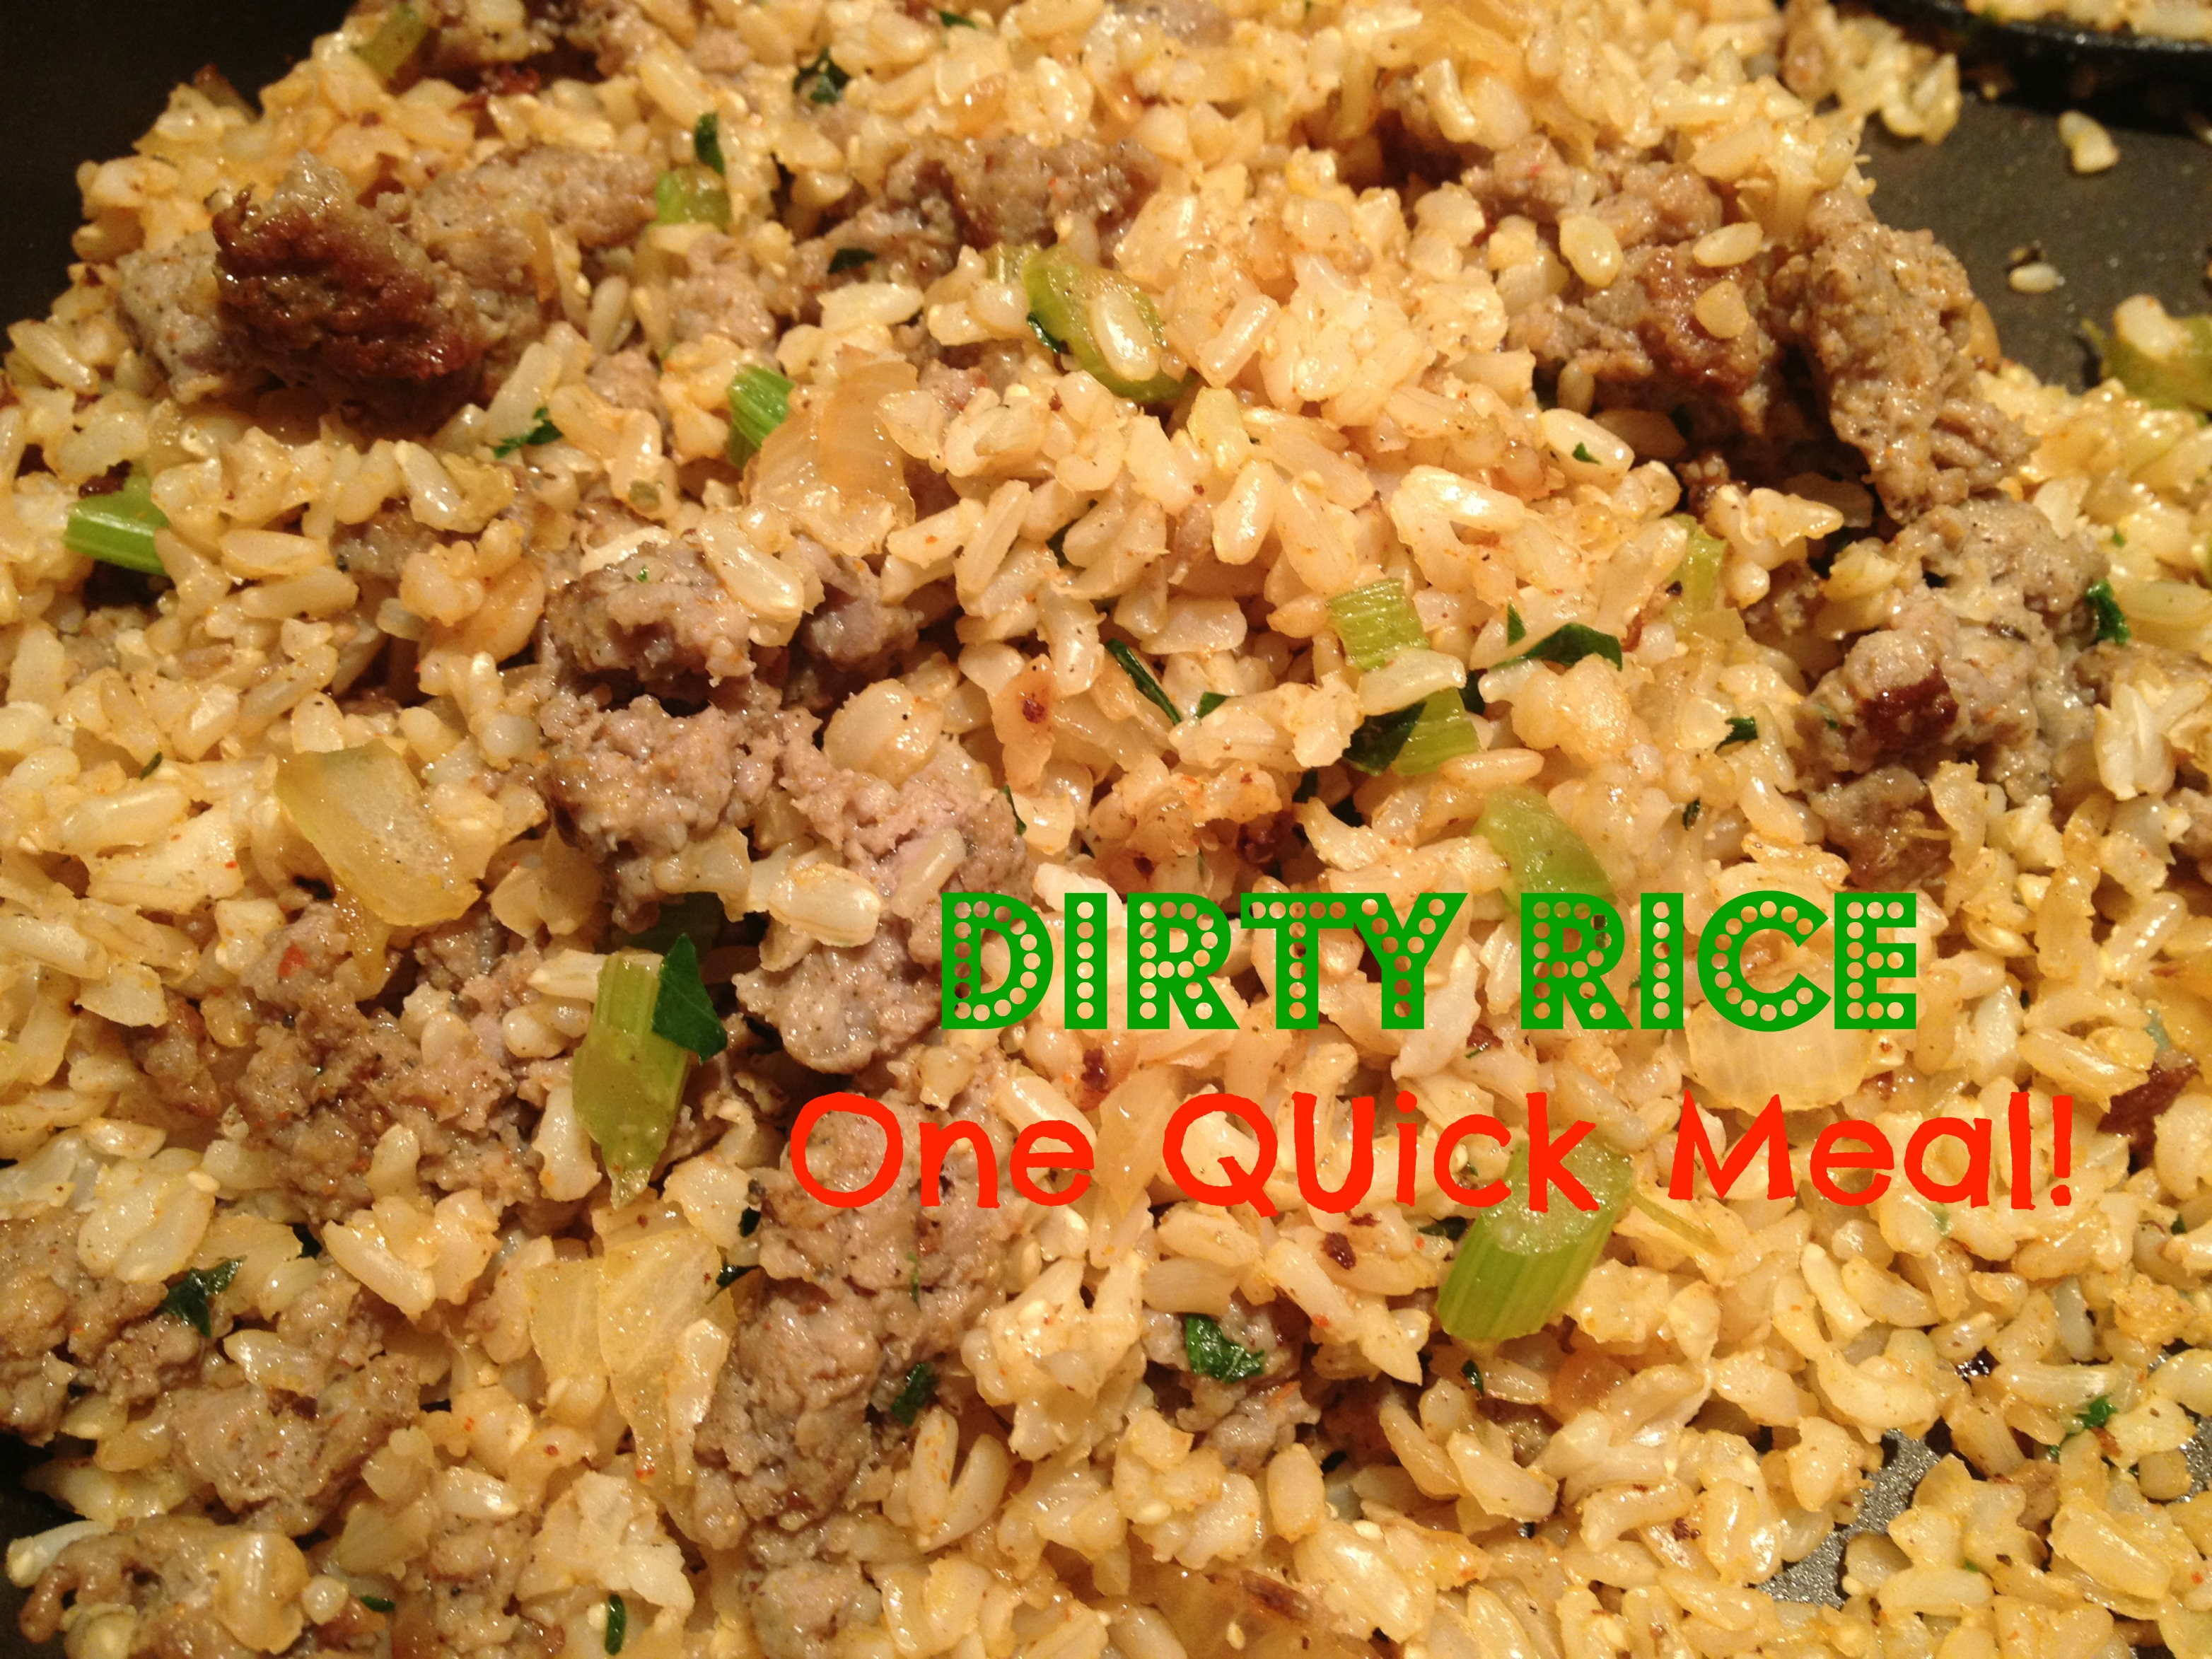 dirty rice